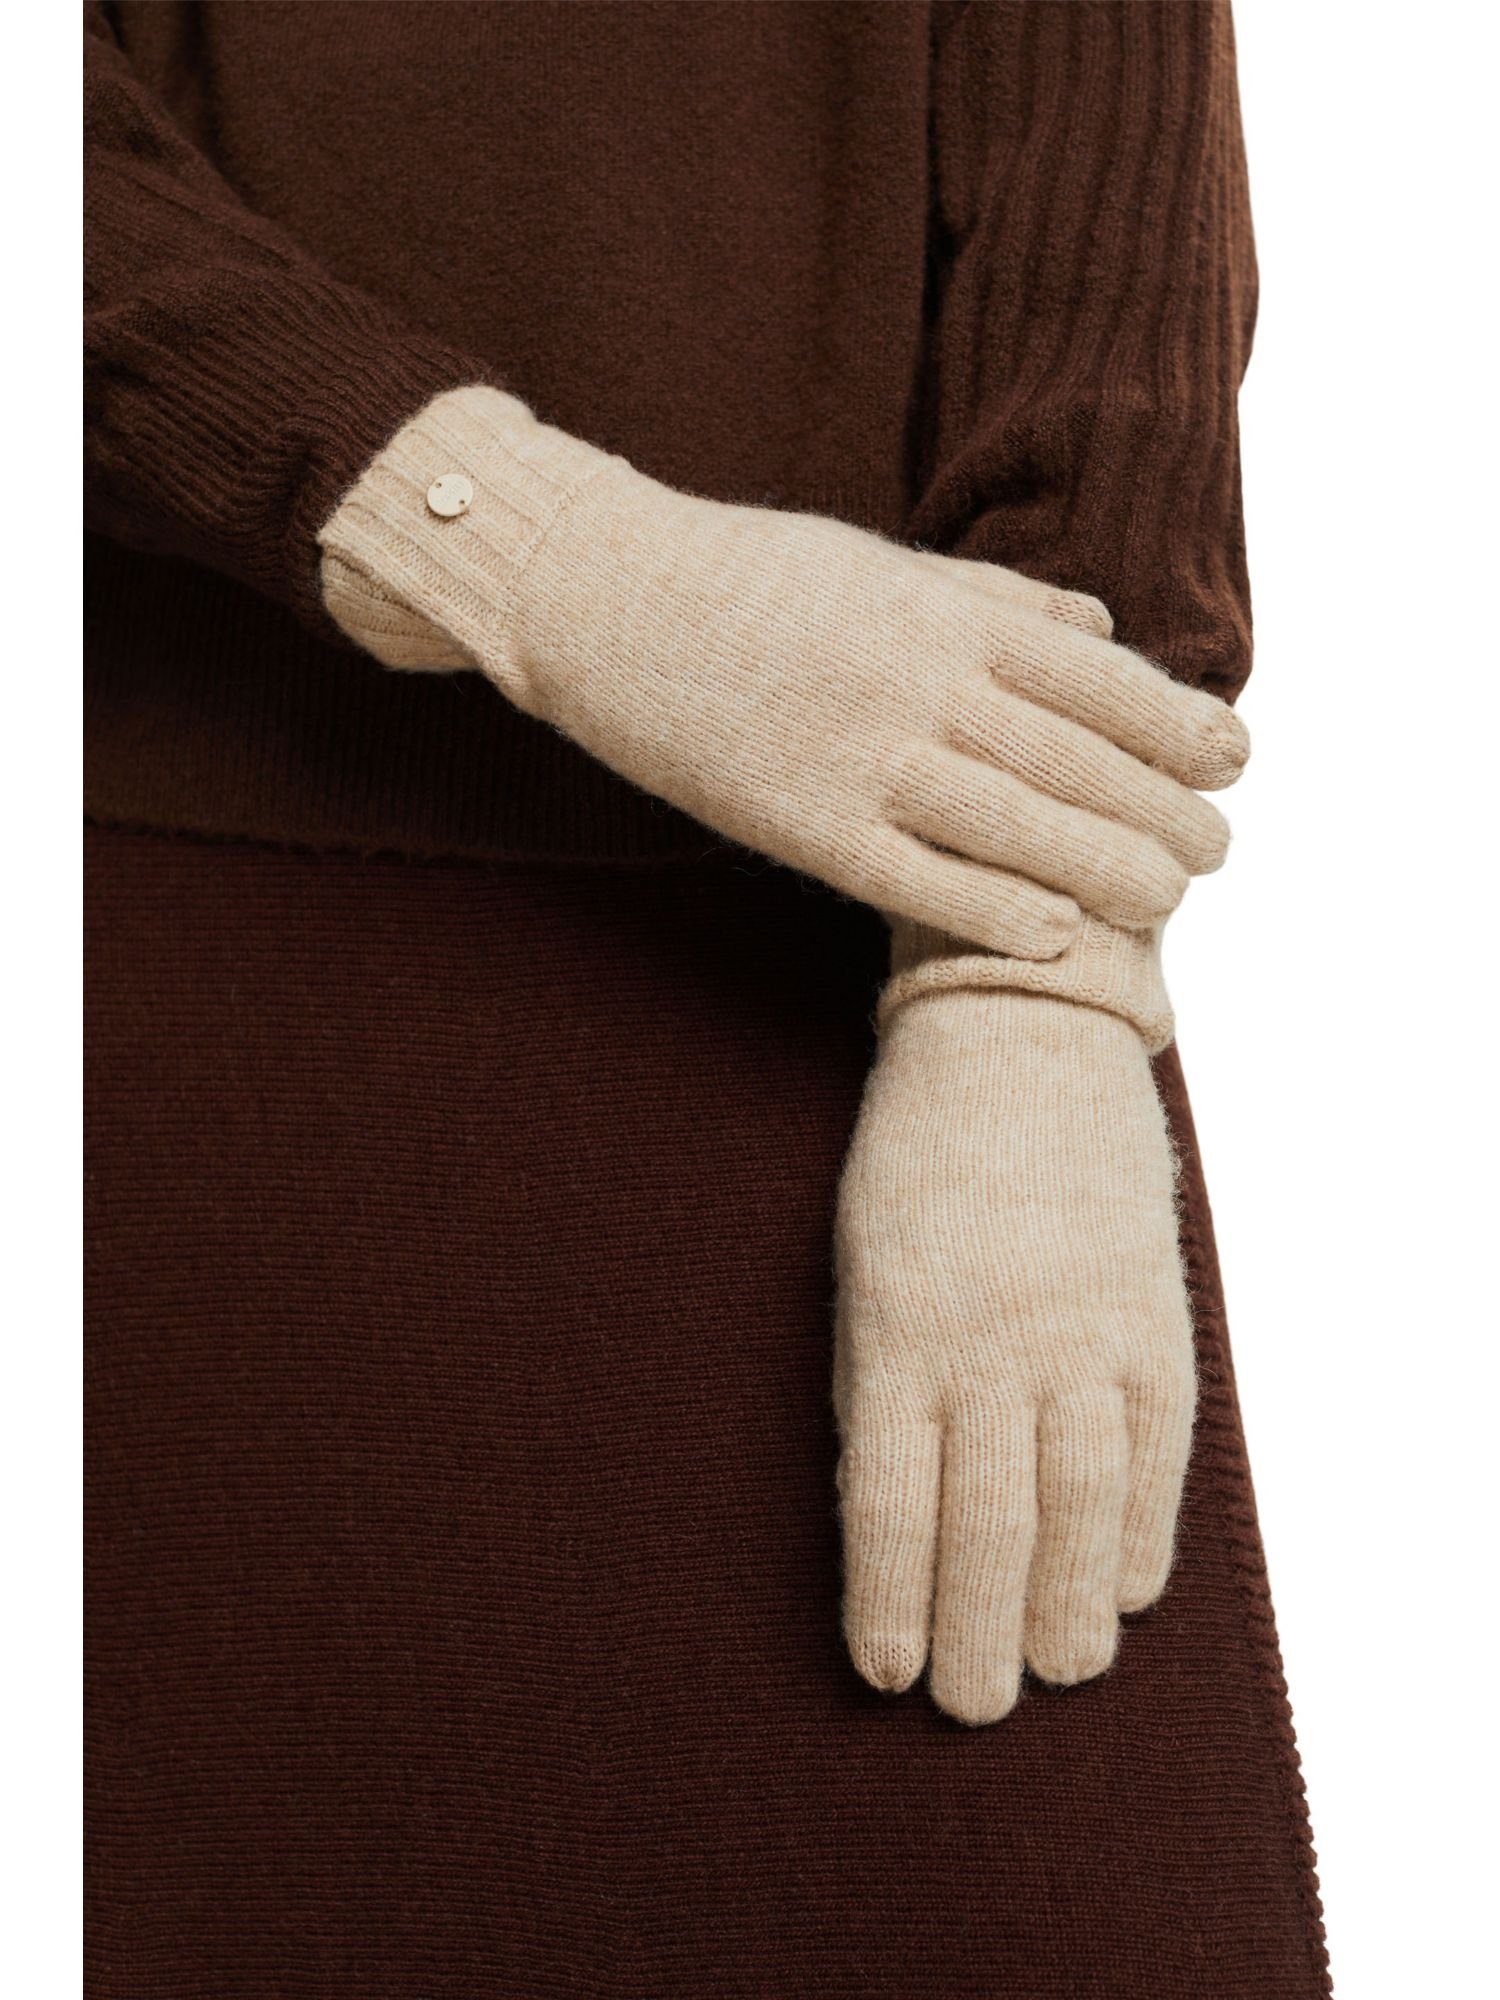 Rippstrick-Handschuhe Esprit Strickhandschuhe BEIGE